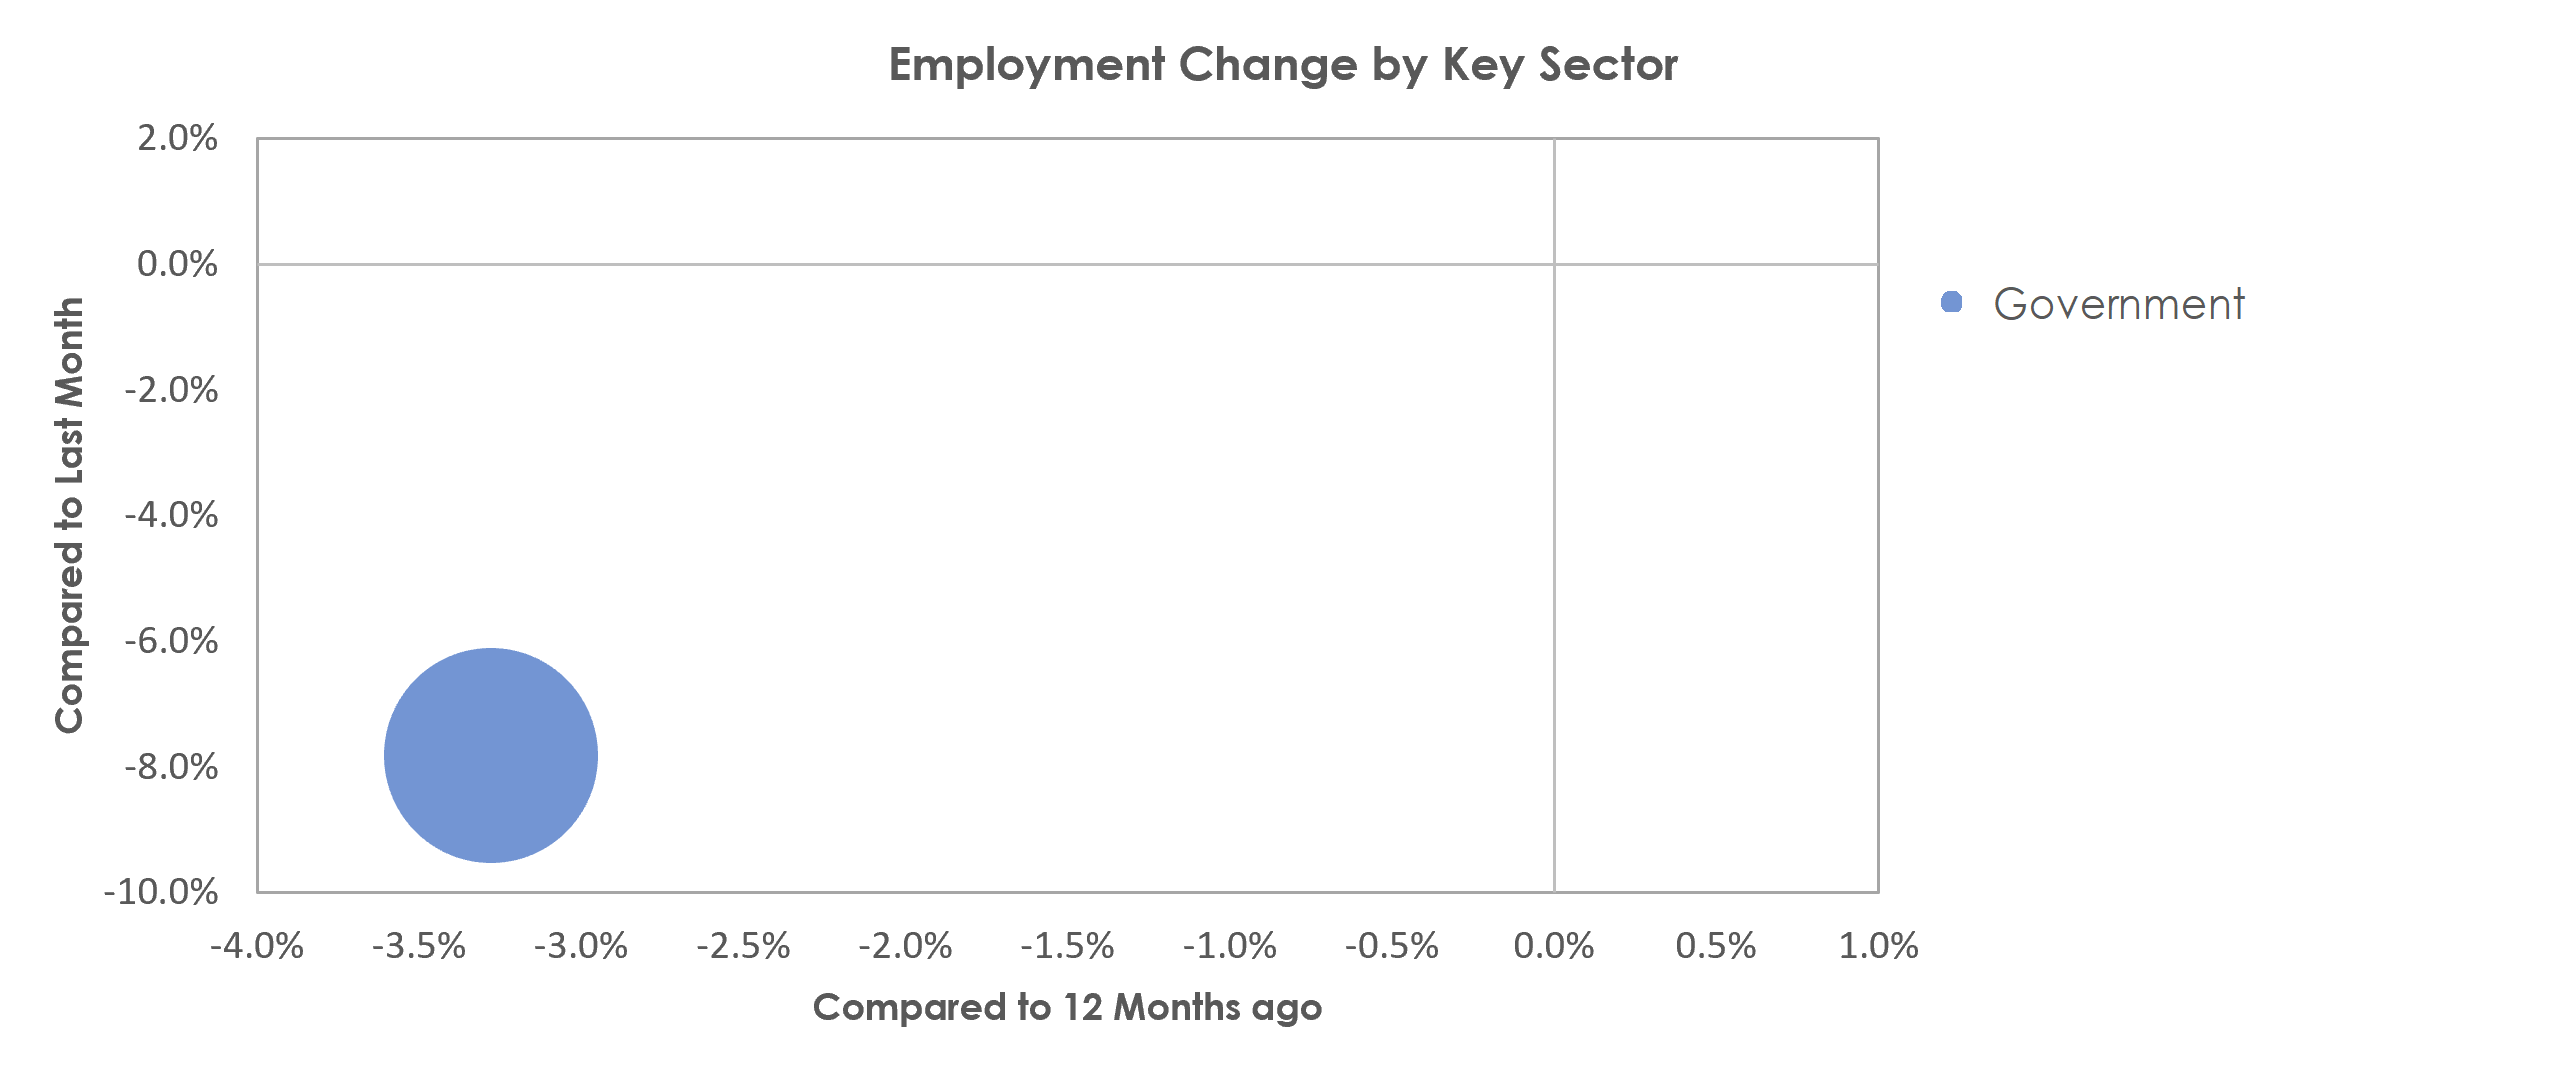 Blacksburg-Christiansburg-Radford, VA Unemployment by Industry May 2021